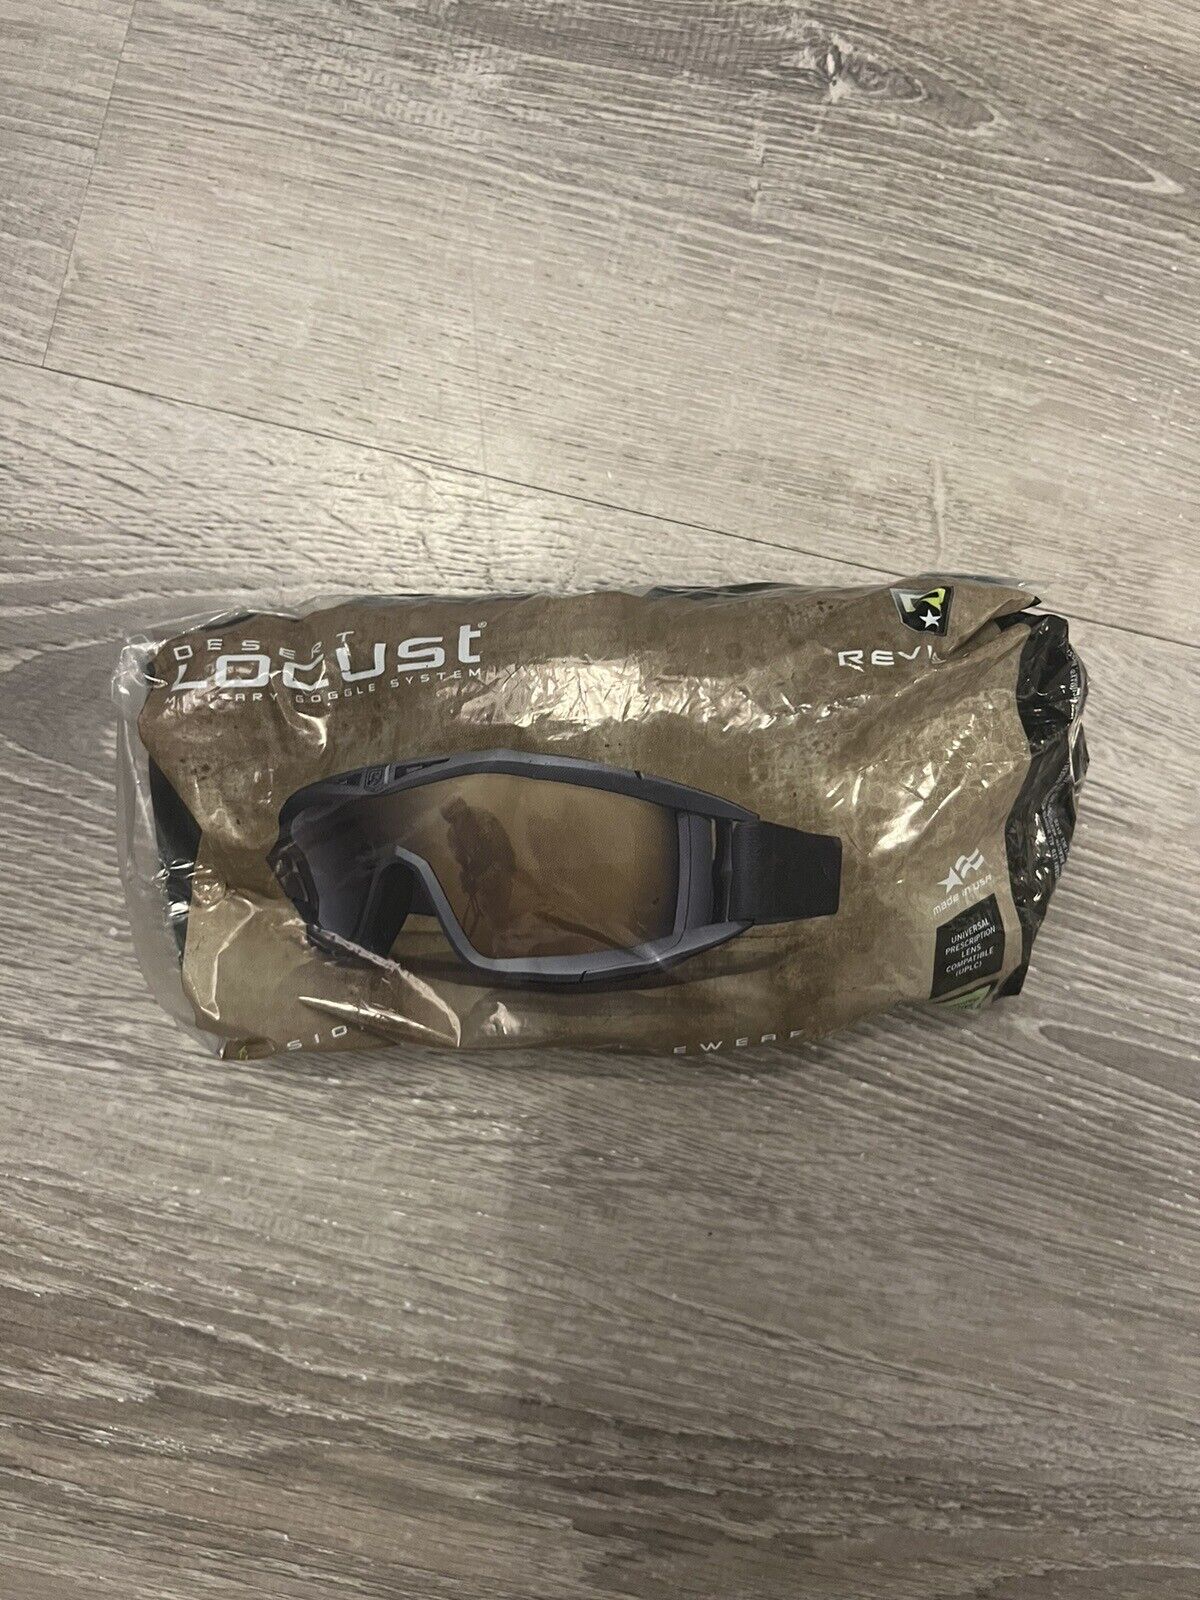 Revision Desert Locust TAN 499 Military Goggle 2-Lens Smoke/Clear Kit APEL